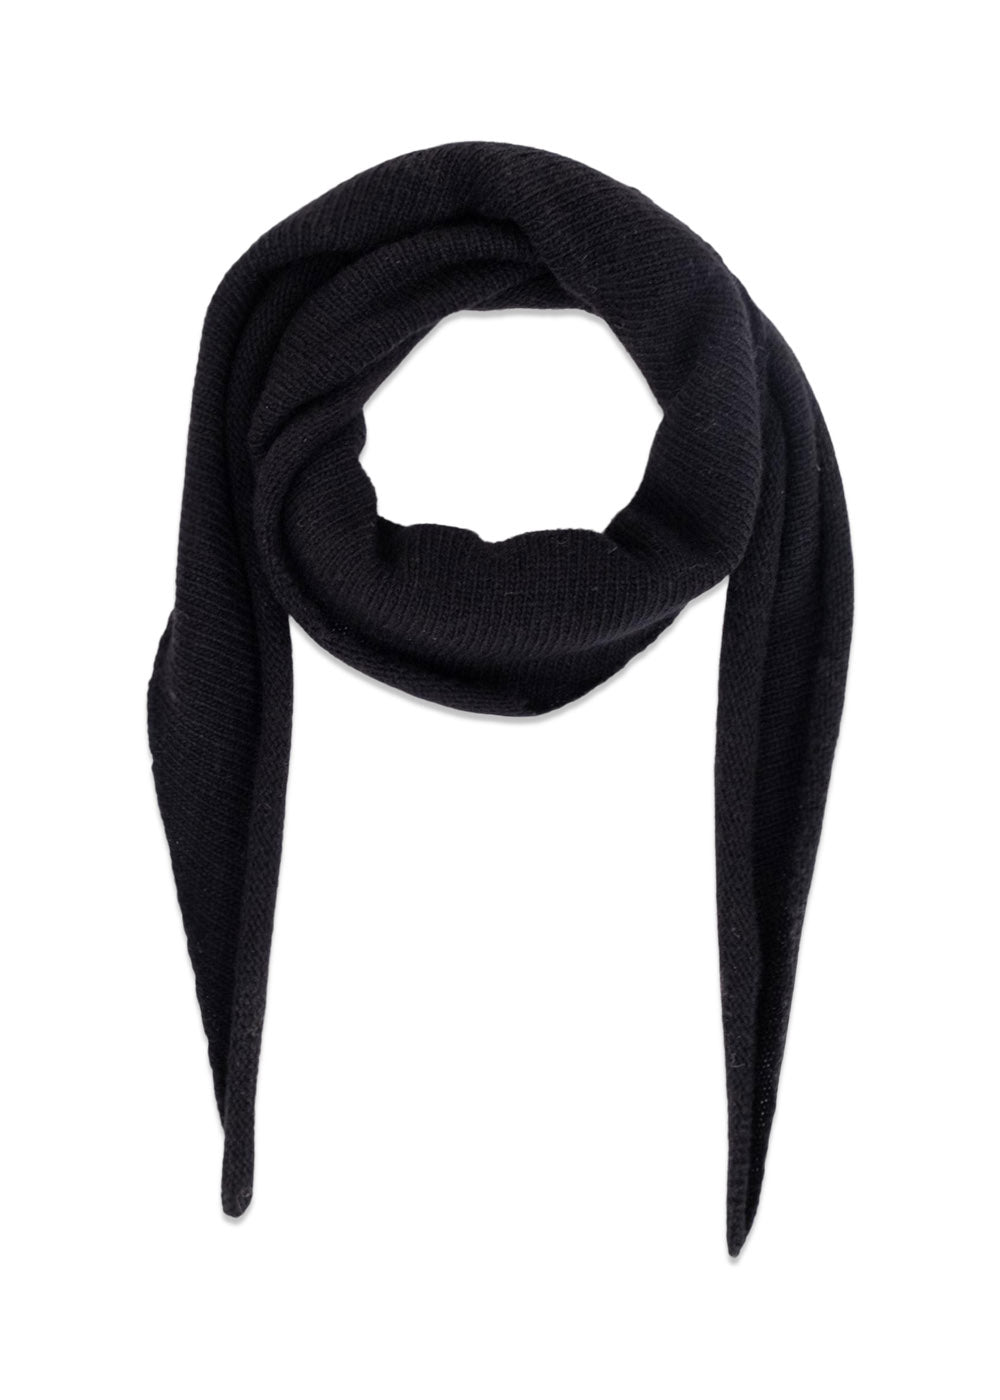 Neo Noirs Misty Knit Scarf - Black. Køb accessories her.